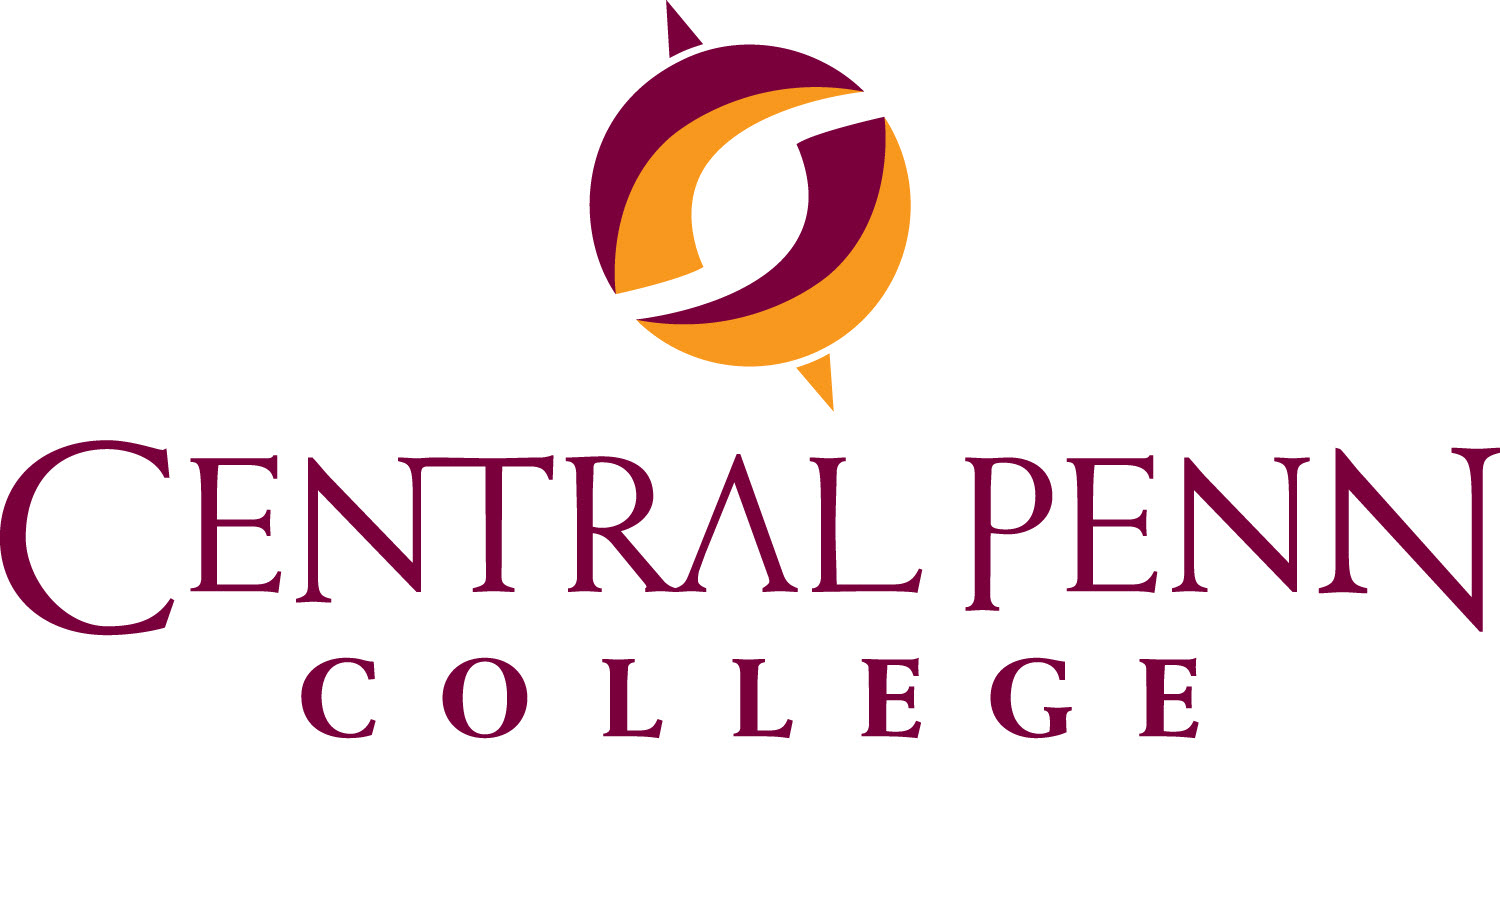 Central Penn College